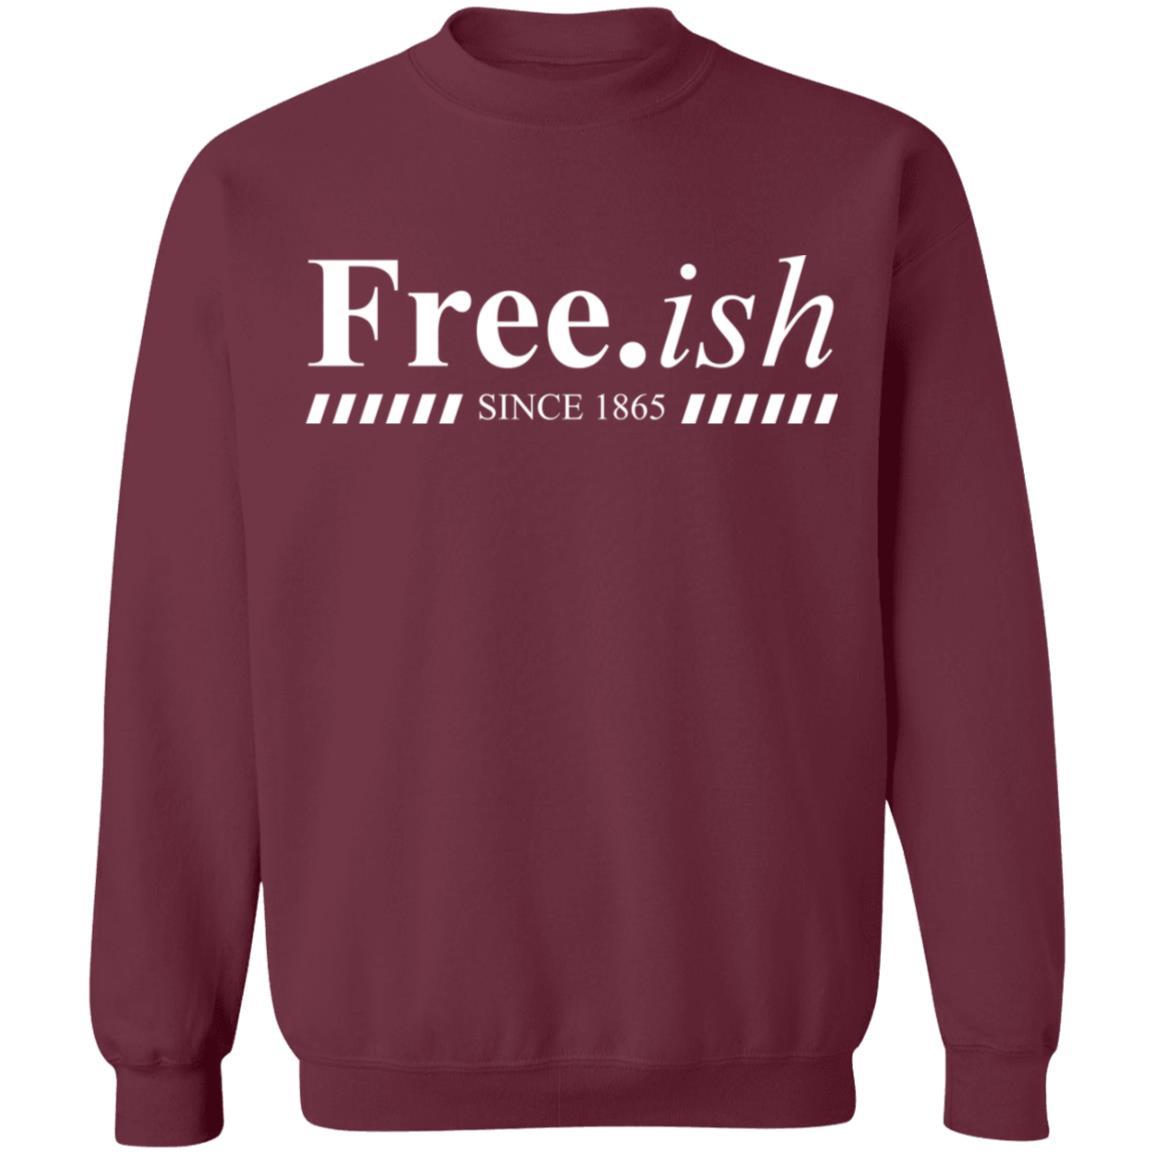 Free.ish Since 1865 Apparel CustomCat Crewneck Sweatshirt Maroon S